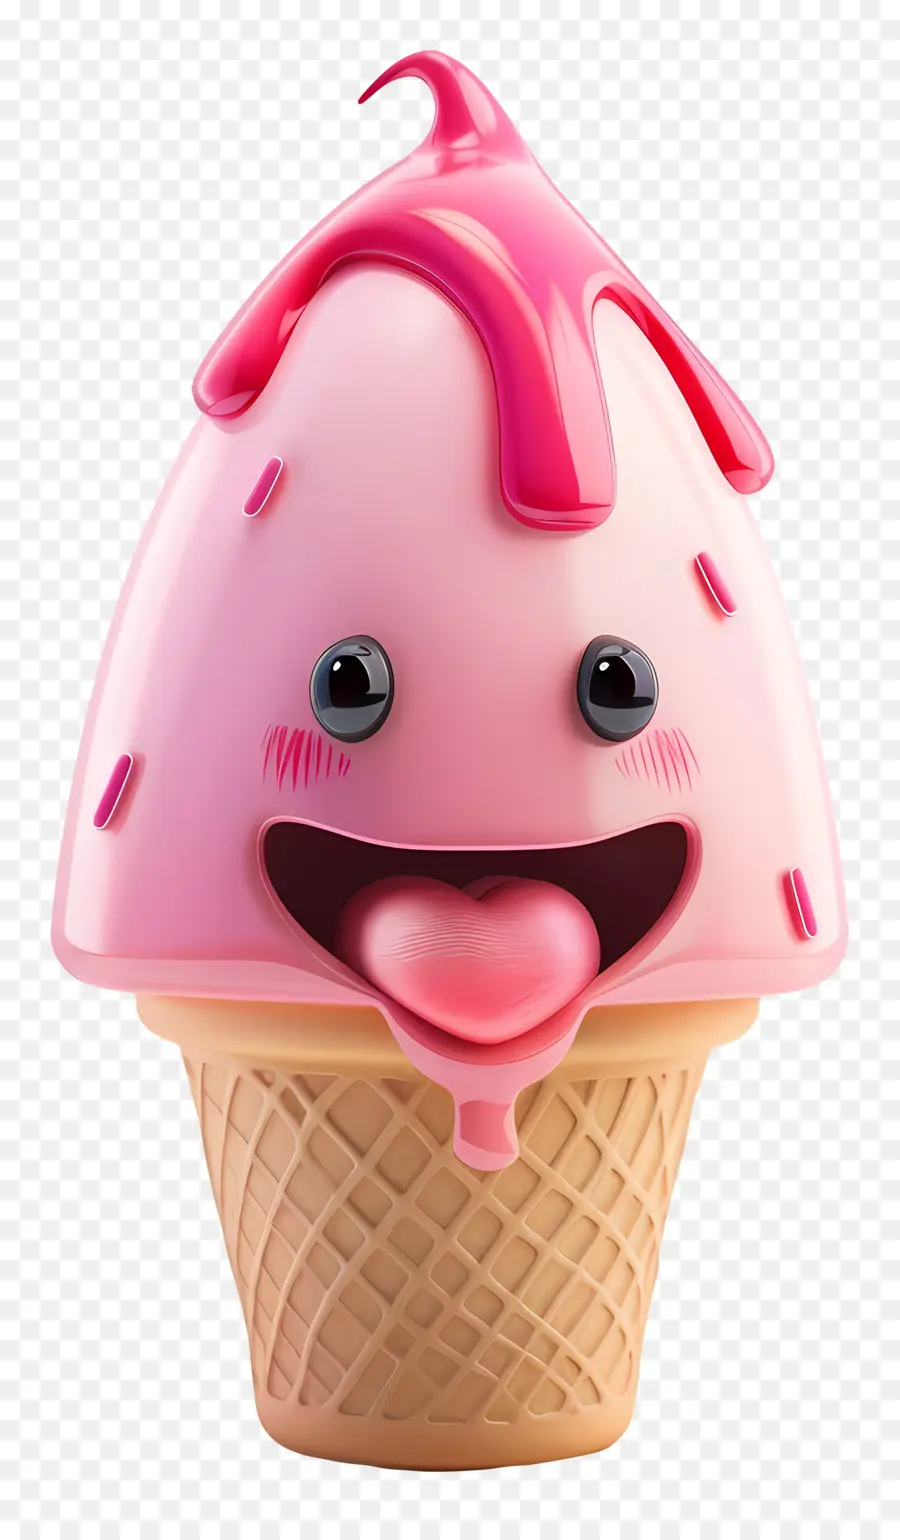 3d cartoon dessert pink ice cream cone whipped cream cherry topping dessert